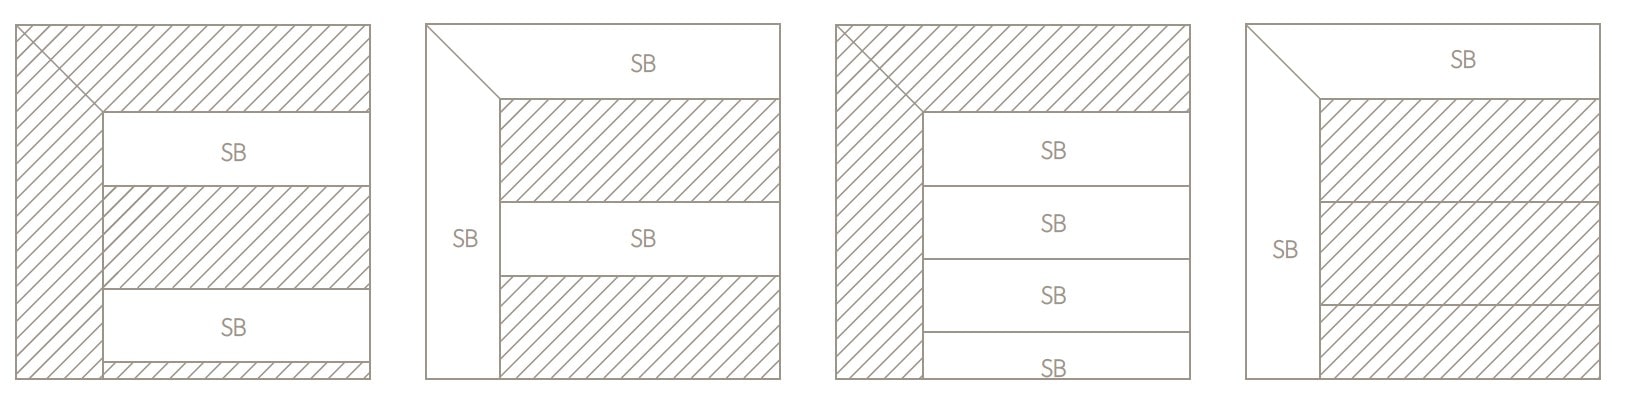 Enhanced Grain SB deck layout ideas